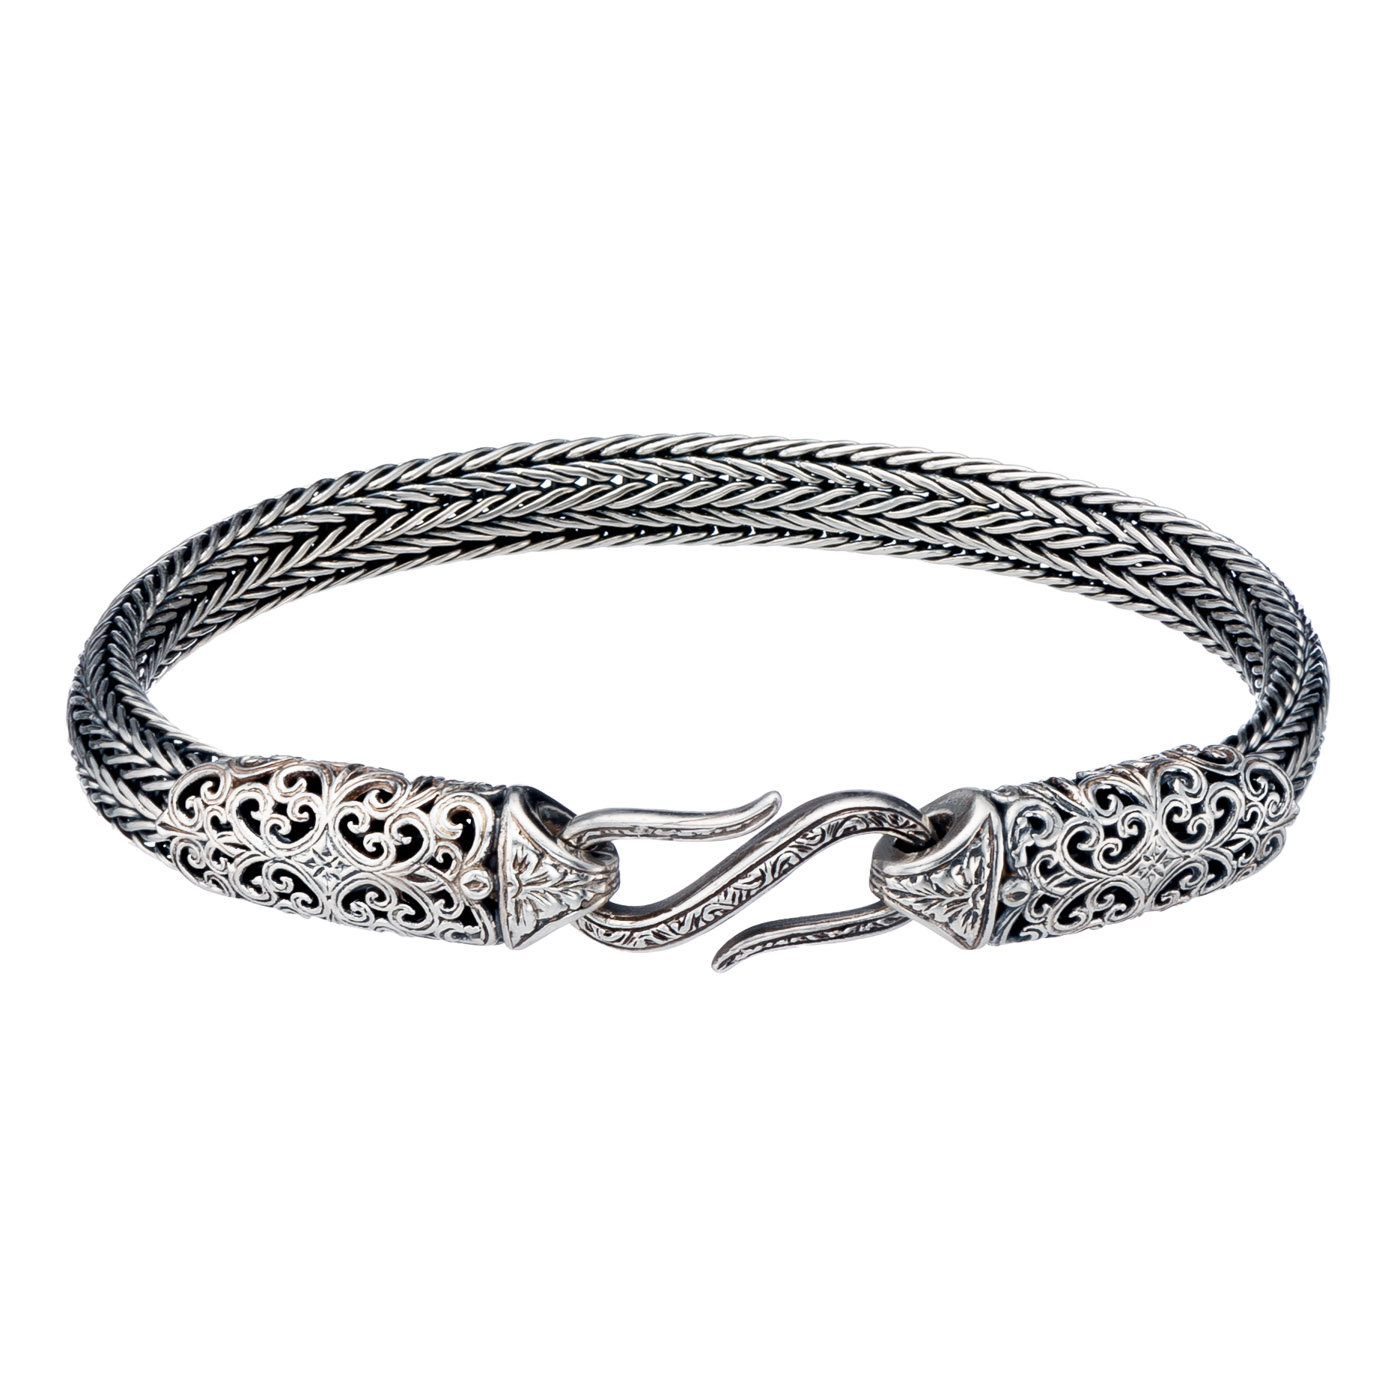 Erotokritos bracelet in Sterling Silver